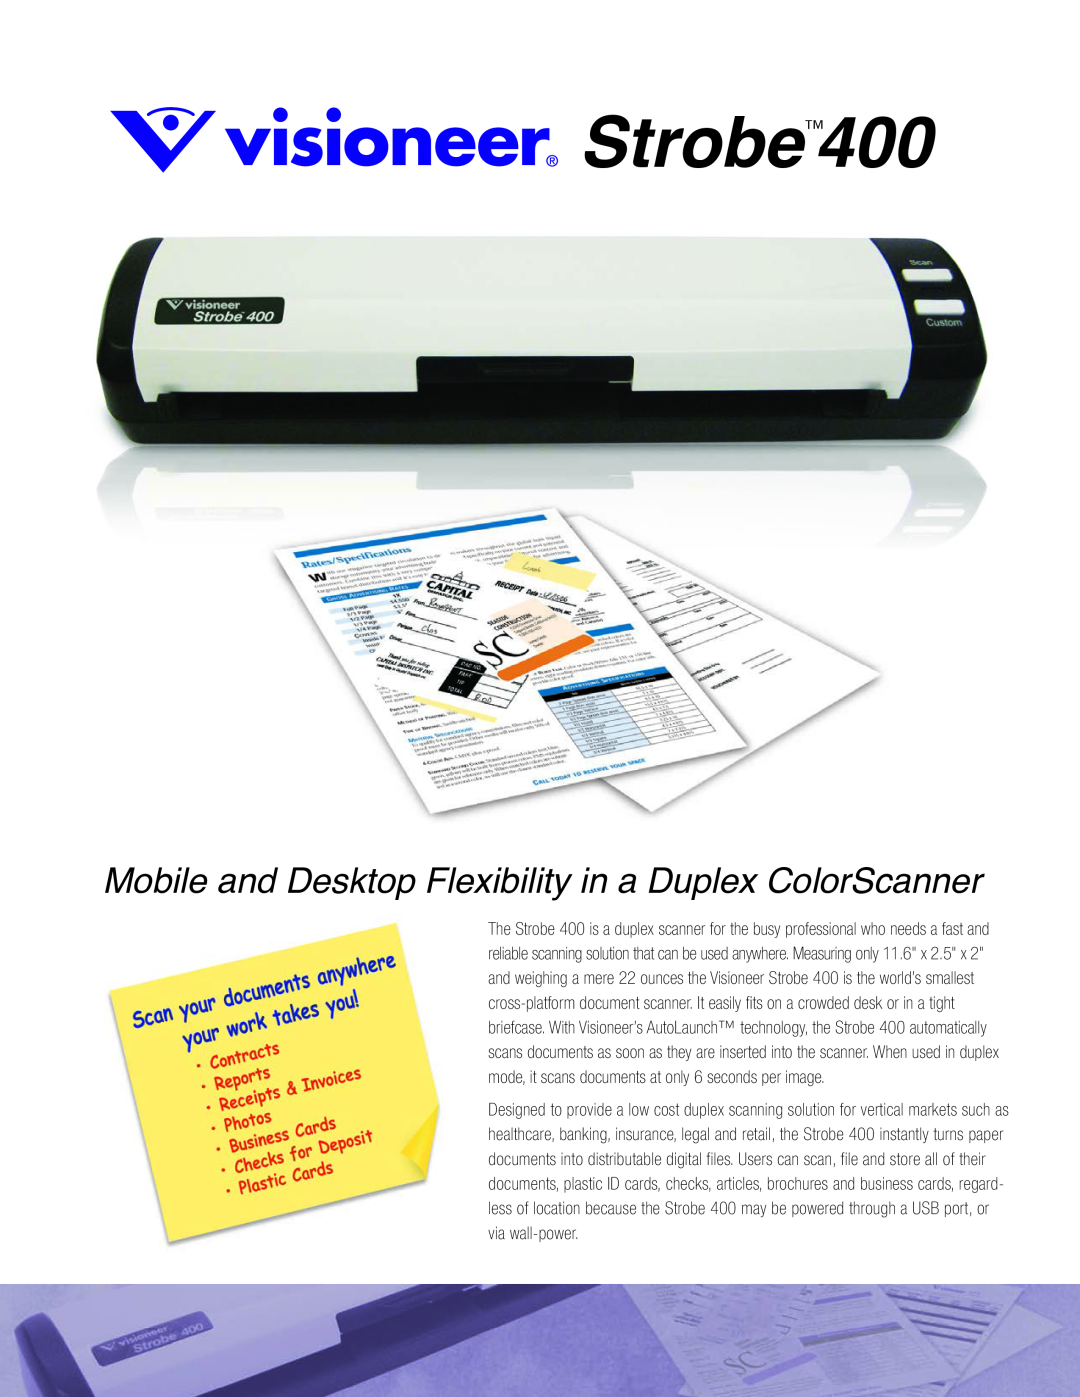 Visioneer brochure Strobe400, Mobile and Desktop Flexibility in a Duplex ColorScanner 